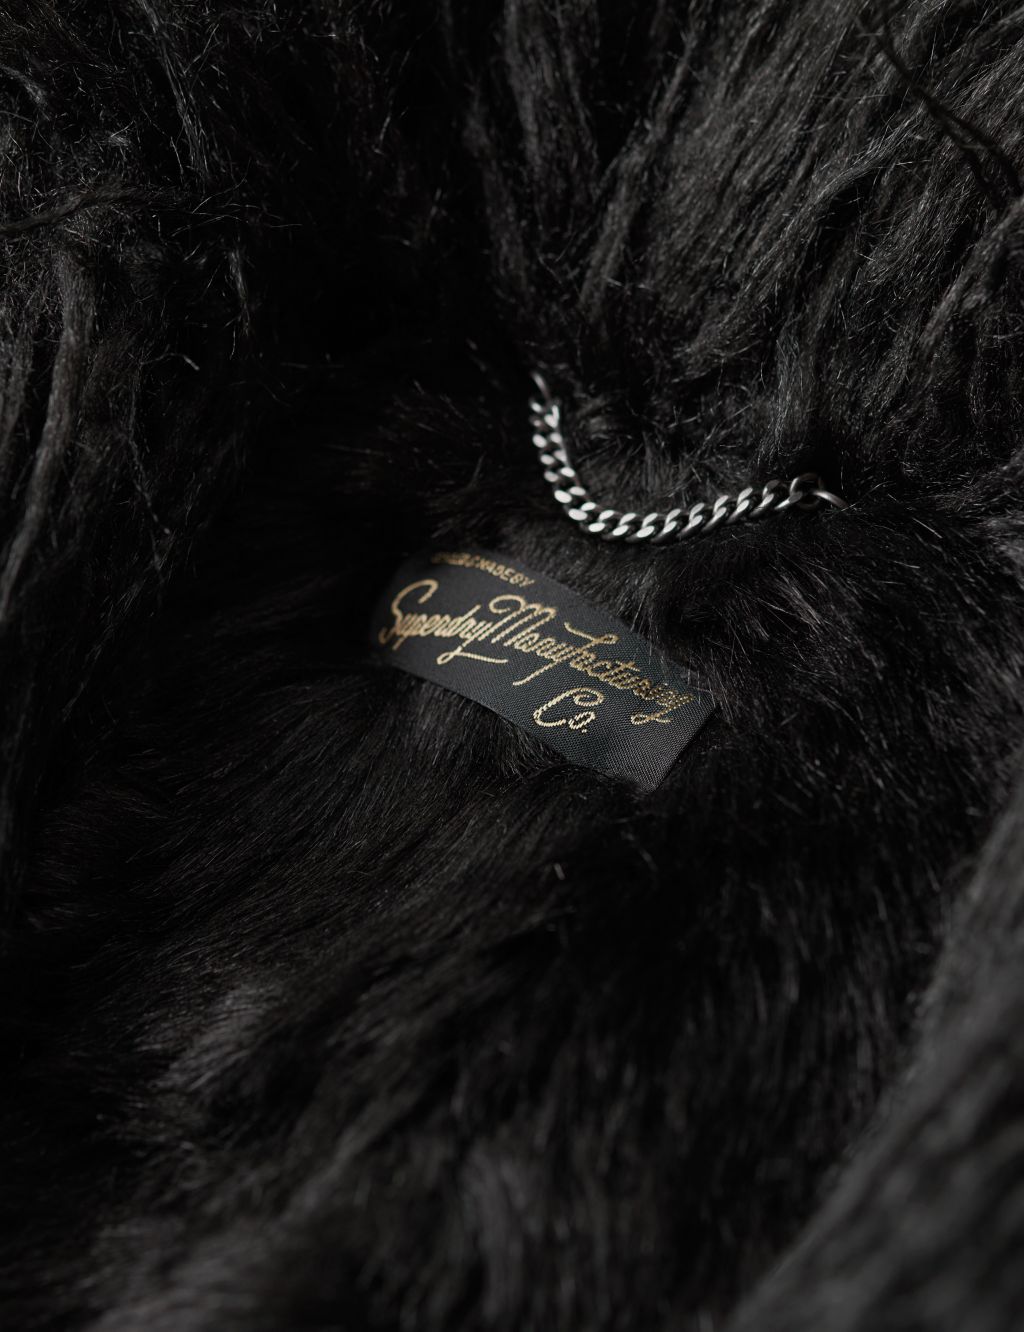 Reed Women's Genuine Mink Fur Bomber Jacket -100% Real Fur - Imported